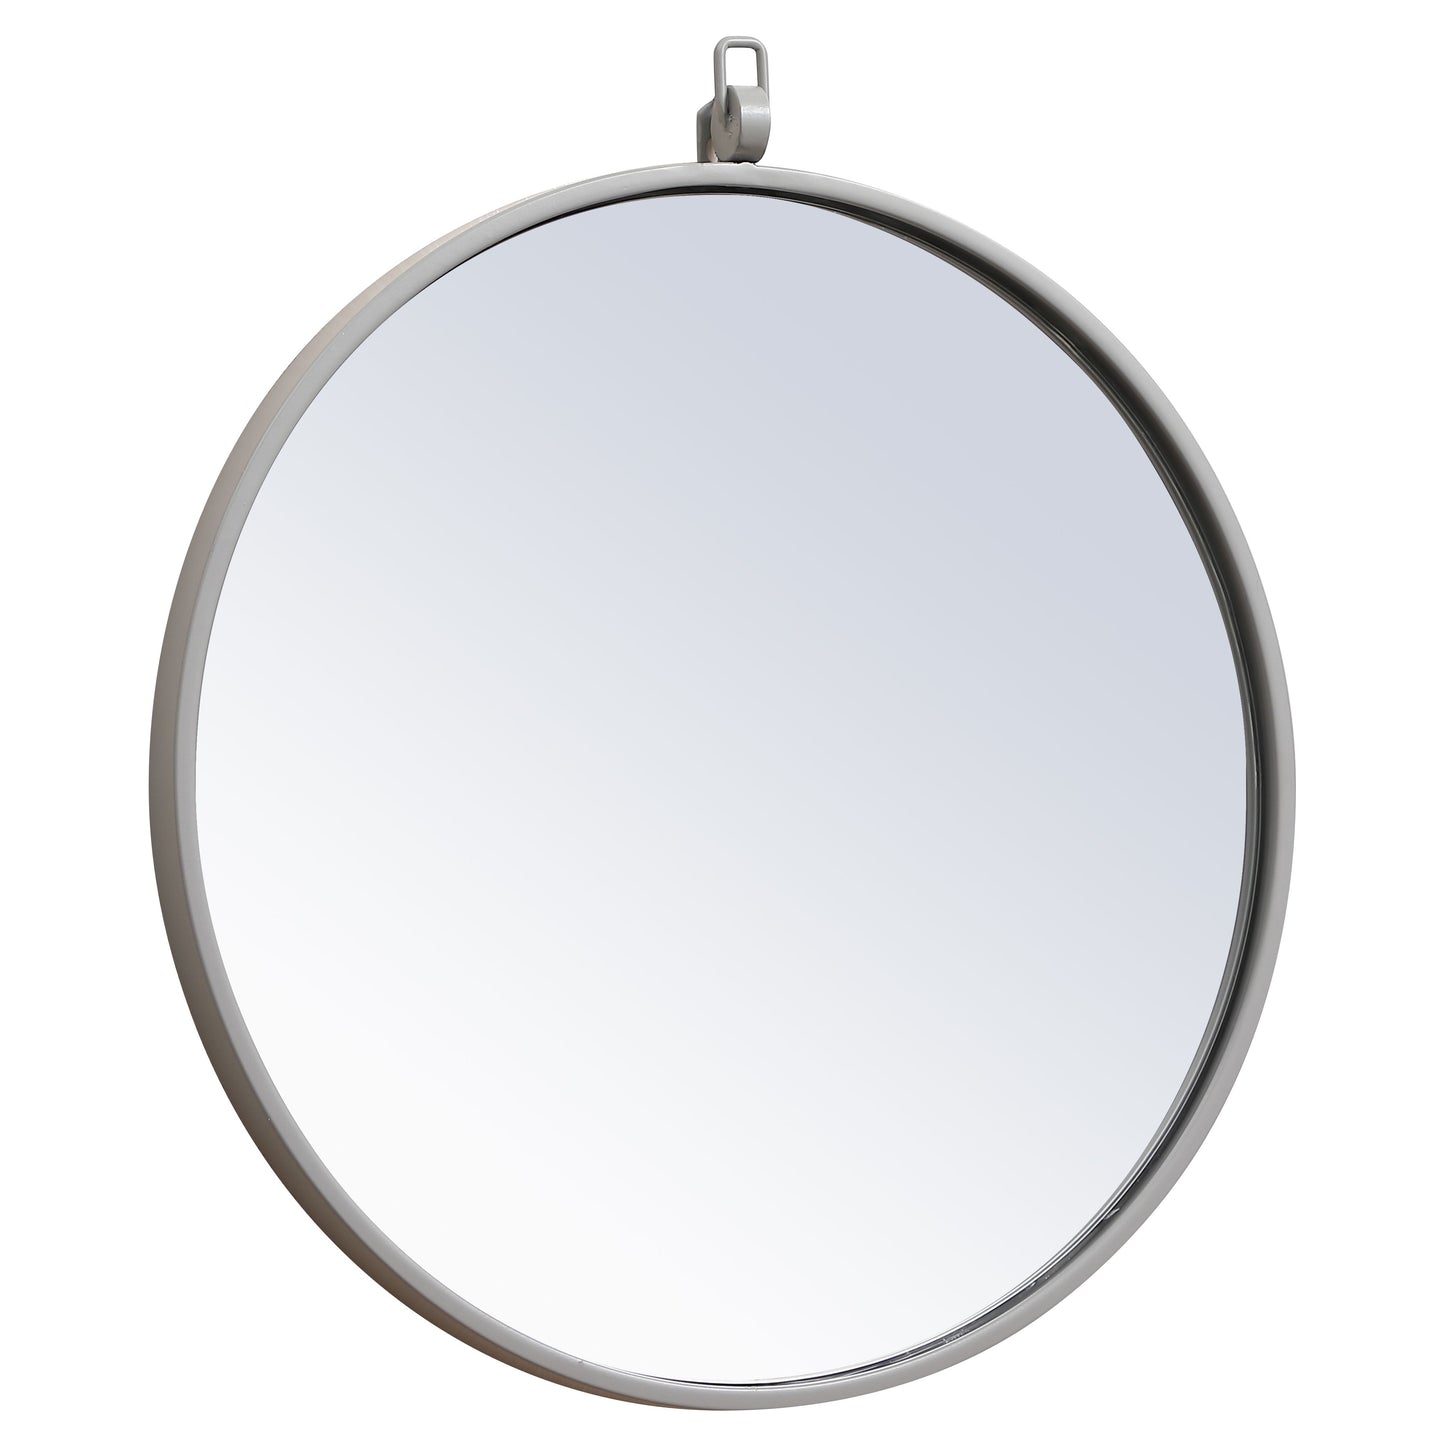 MR4718GR Rowan 18" x 18" Metal Framed Round Mirror with Decorative Hook in Grey